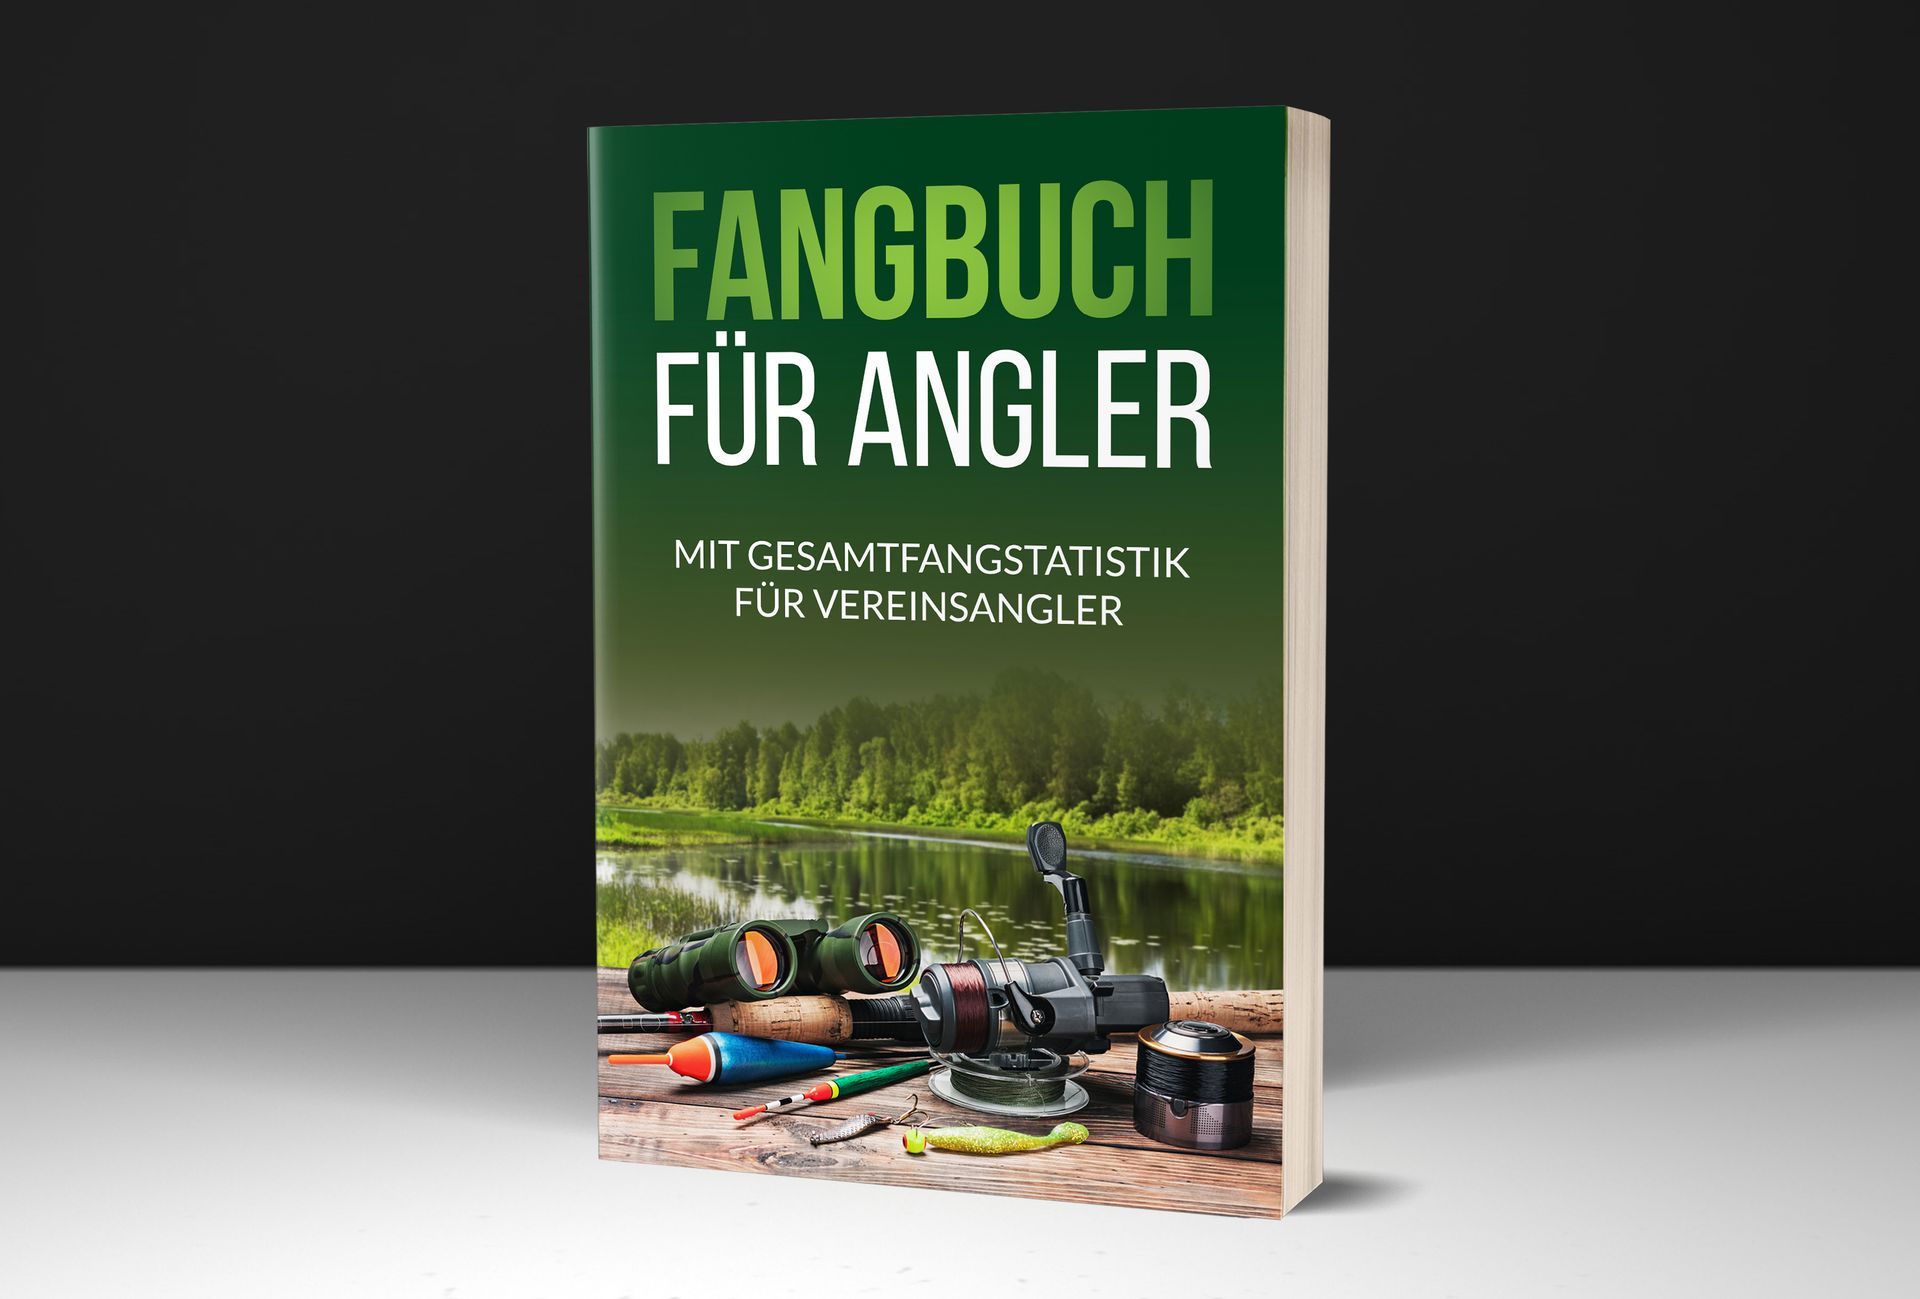 Fangbuch für Angler